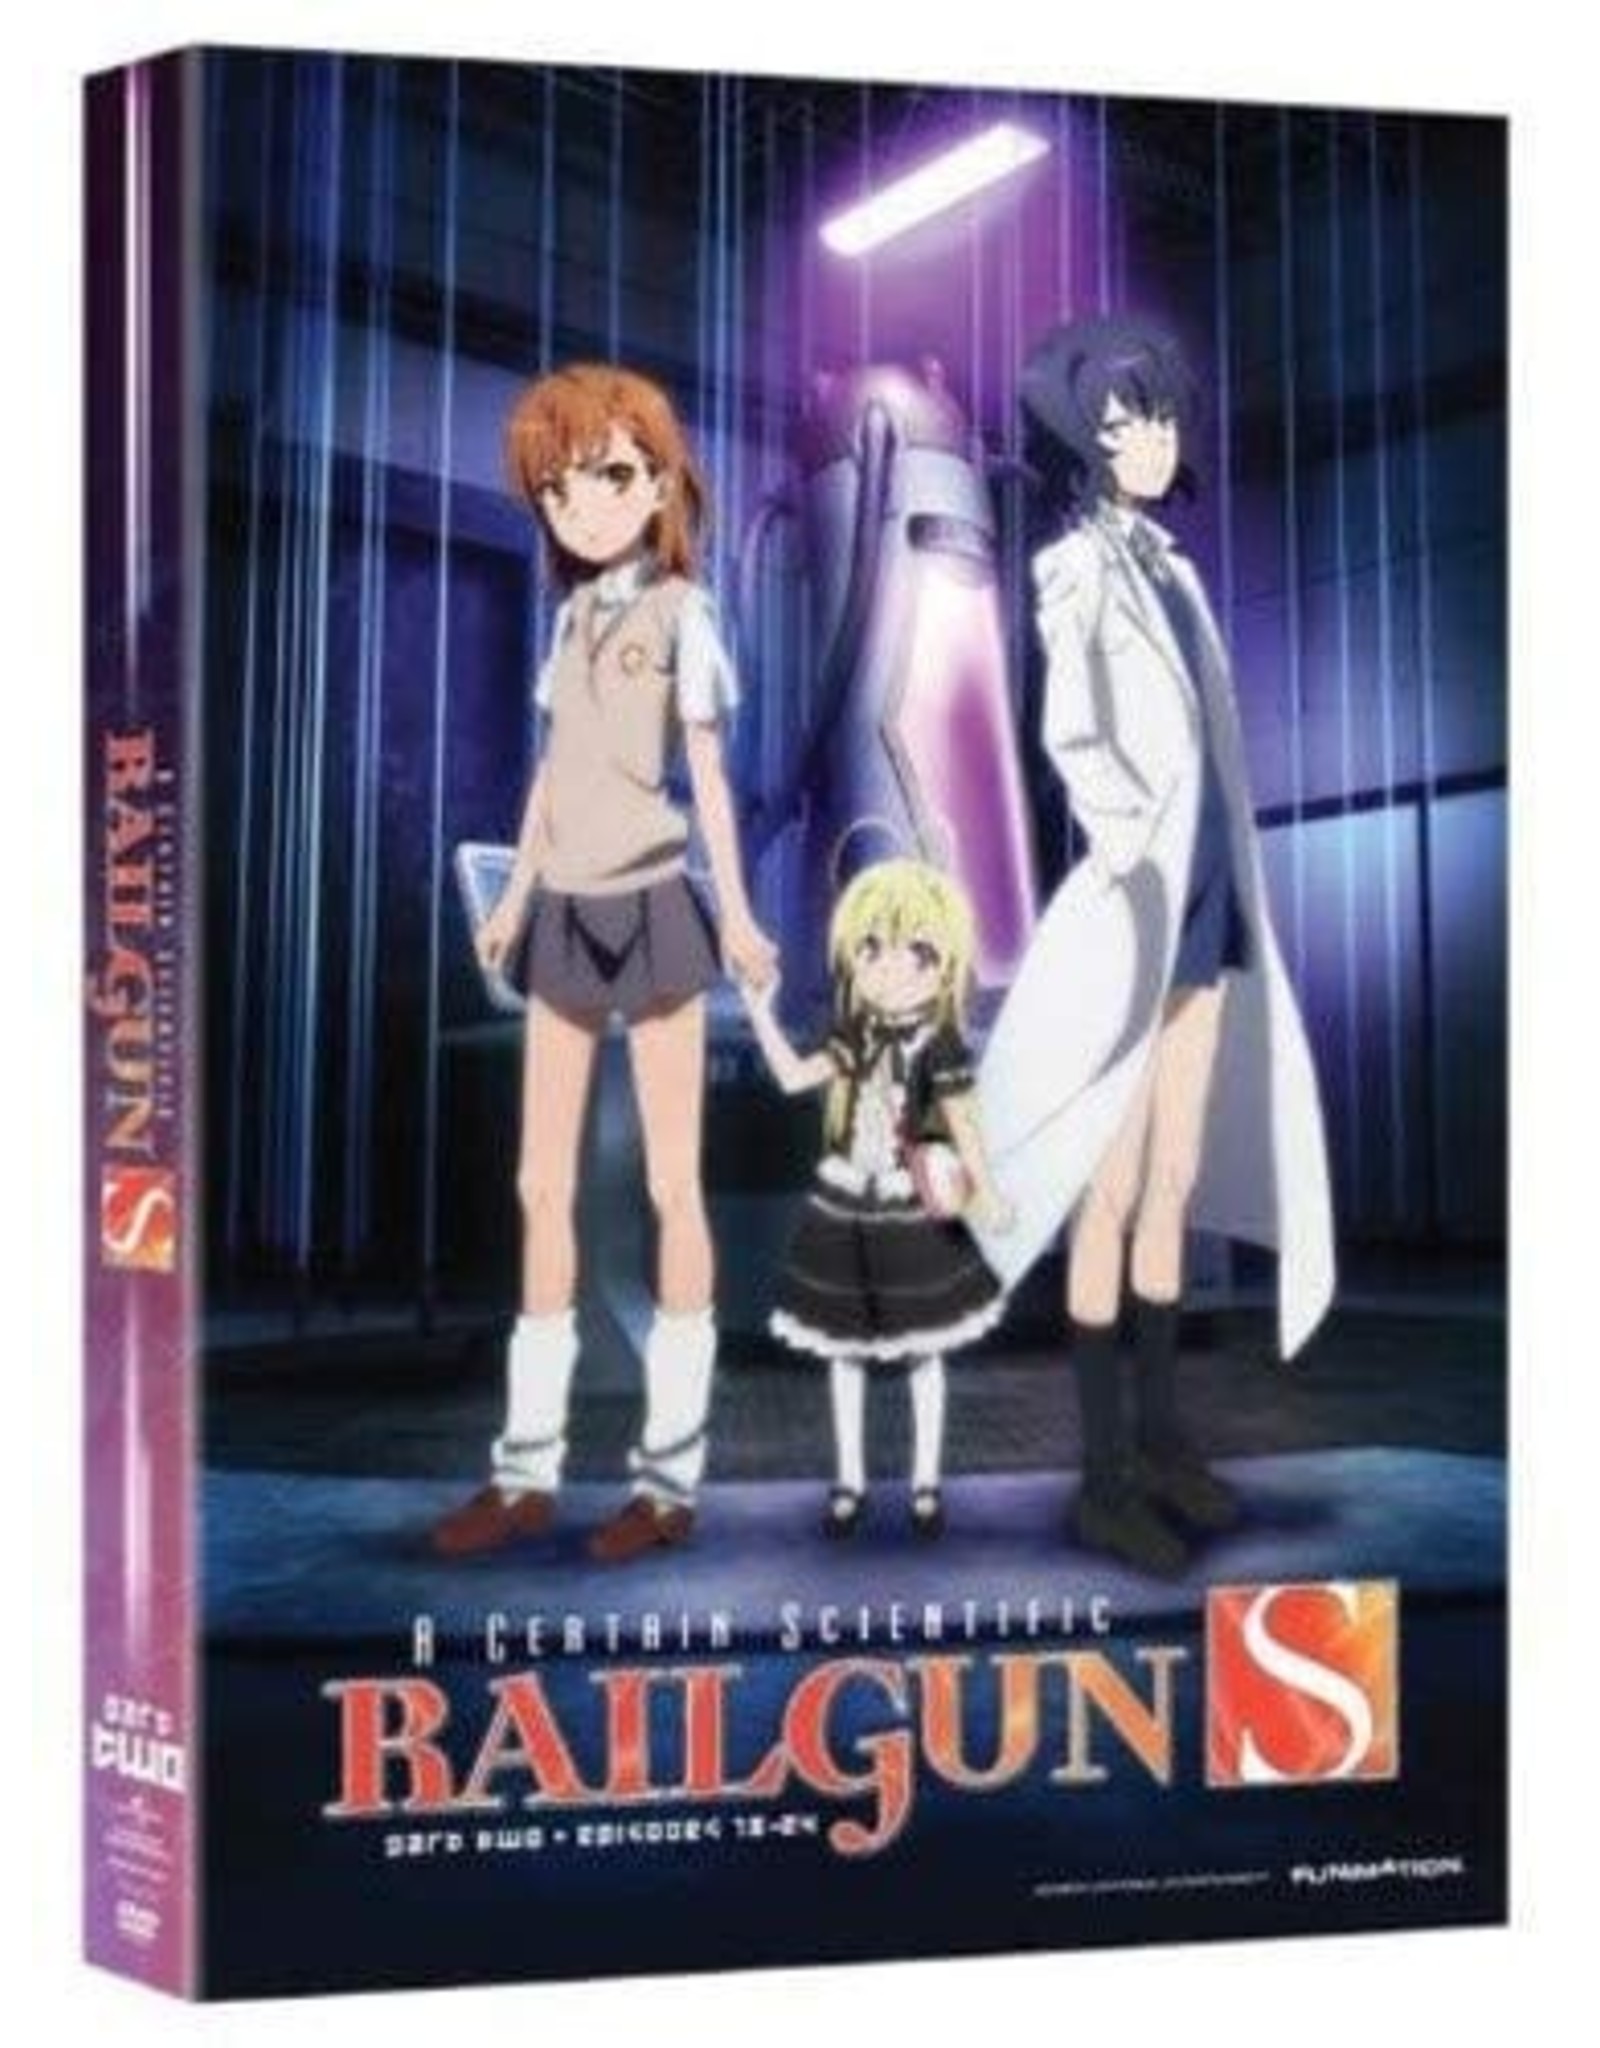 Anime & Animation Certain Scientific Railgun S, A - Season 2 Part 2